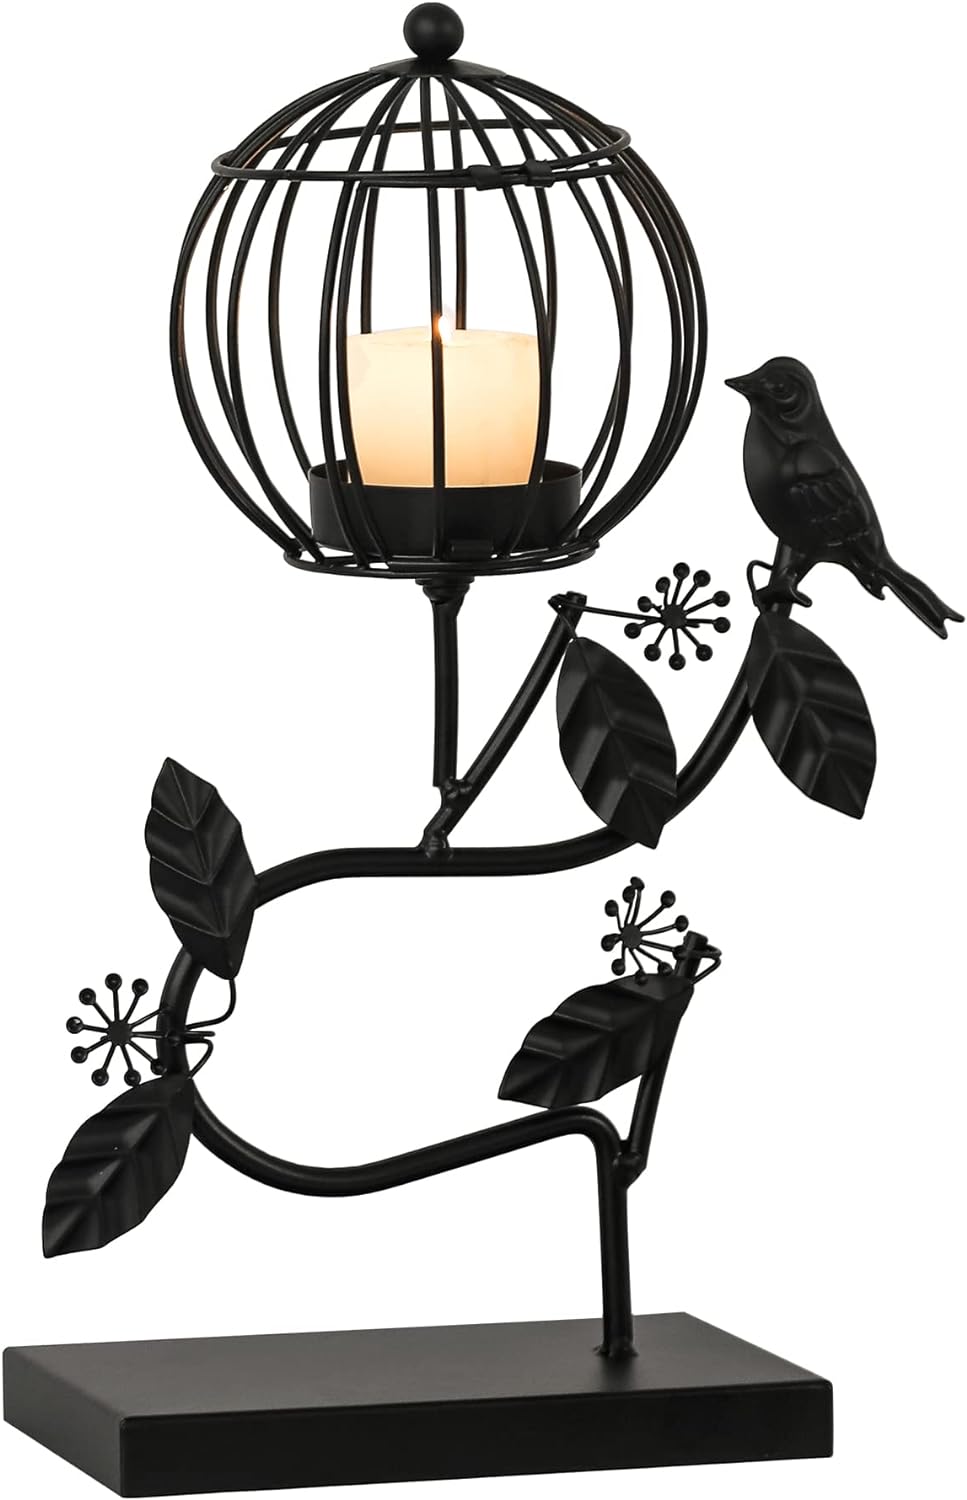 Adeco Decorative Table Candle Lanterns Iron Candle Holder Outdoor Lanterns Rustic Home Decor for Garden, Patio